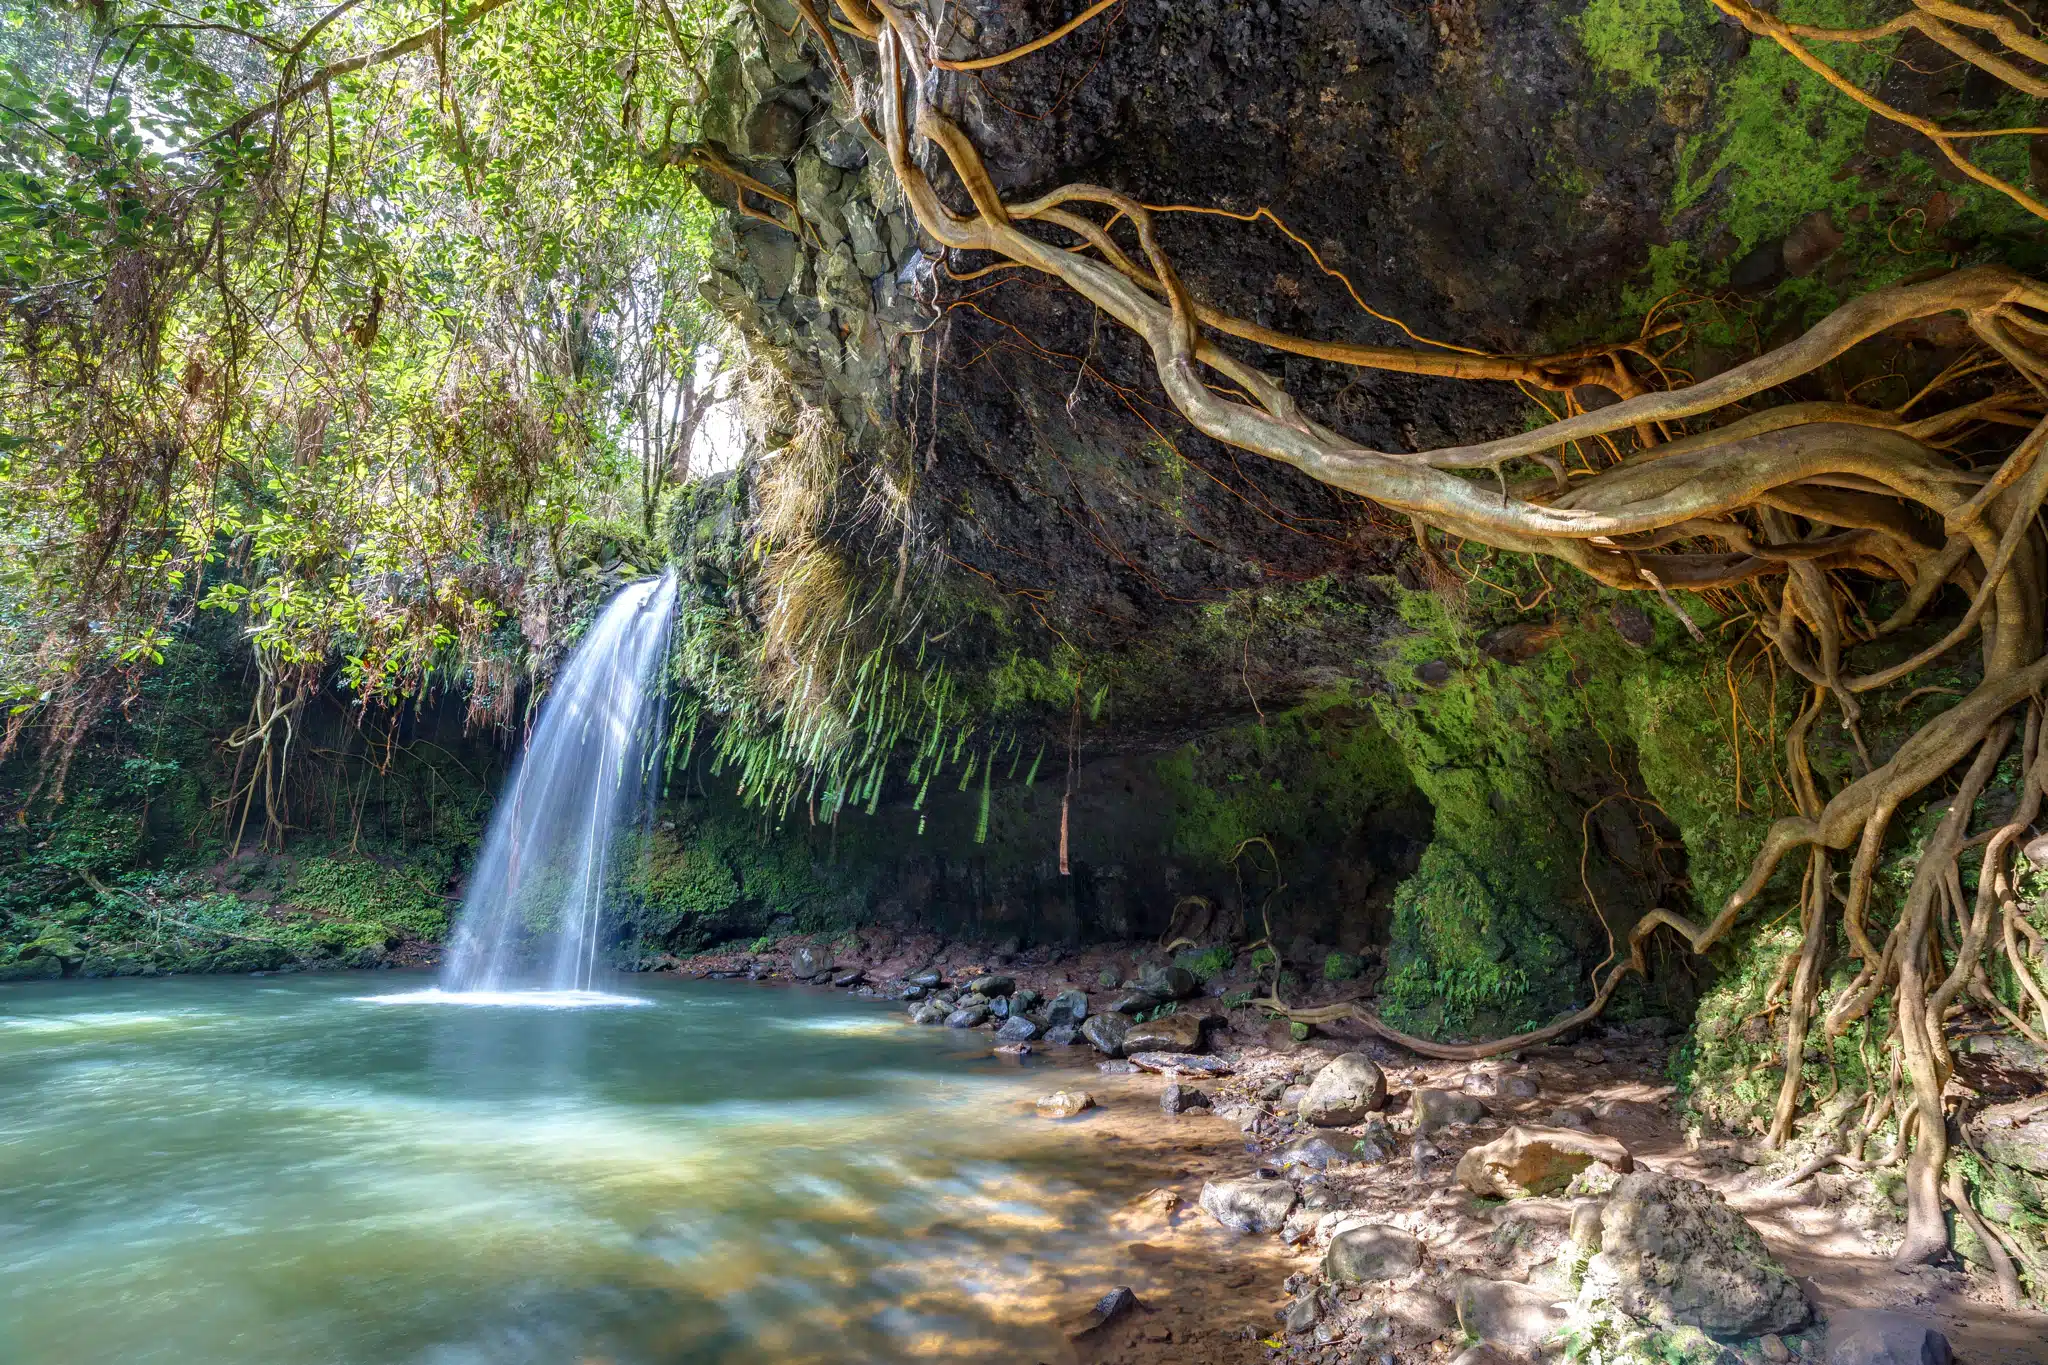 Twin Falls Maui Hike is a Hiking Trail located in the city of Haiku on Maui, Hawaii